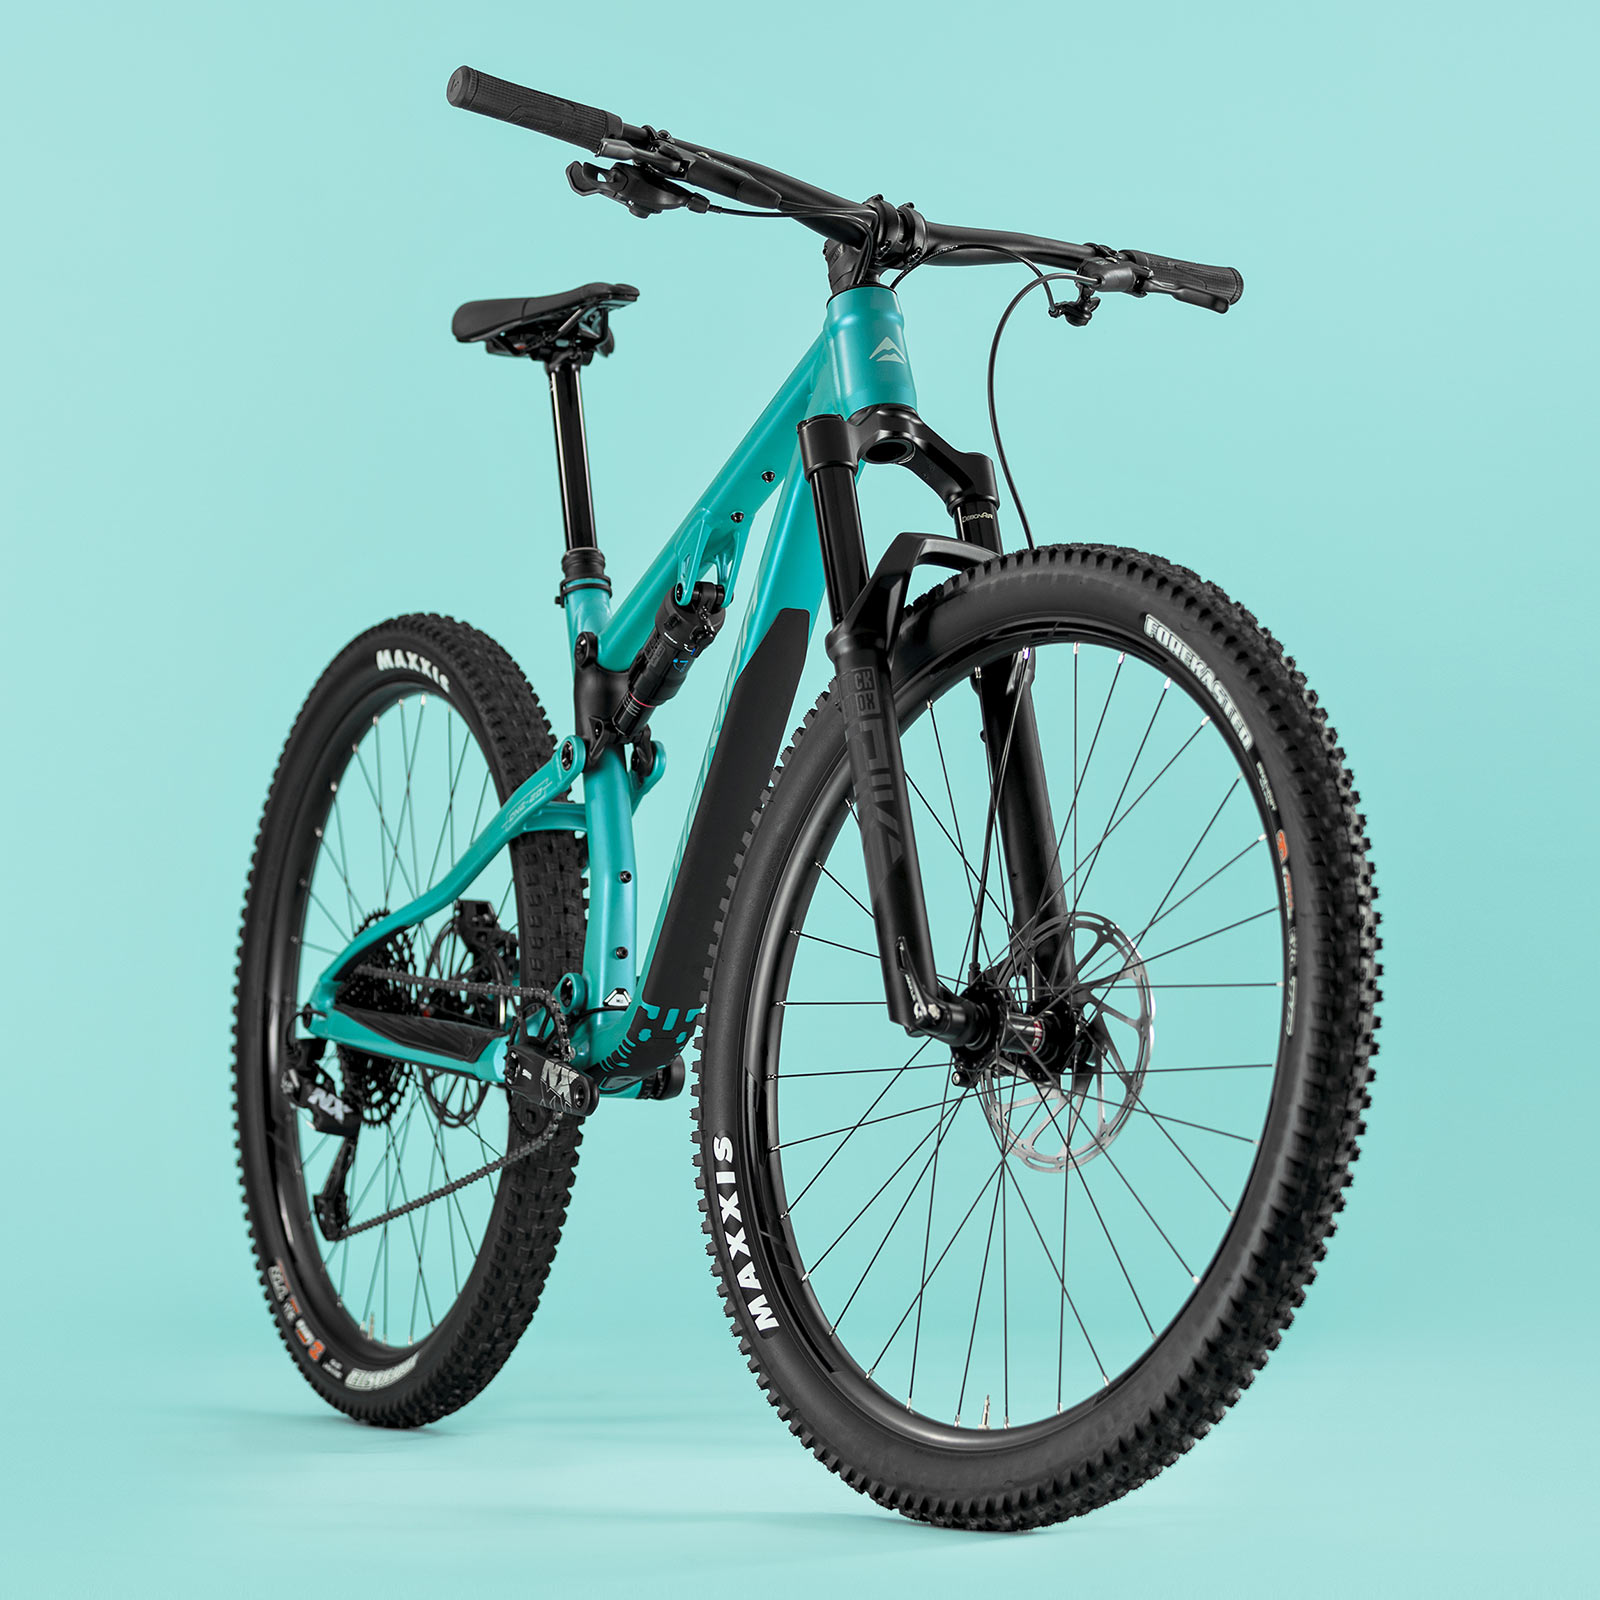 Merida One-Twenty, affordable 130mm aluminum alloy Lite trail mountain bike details, angled